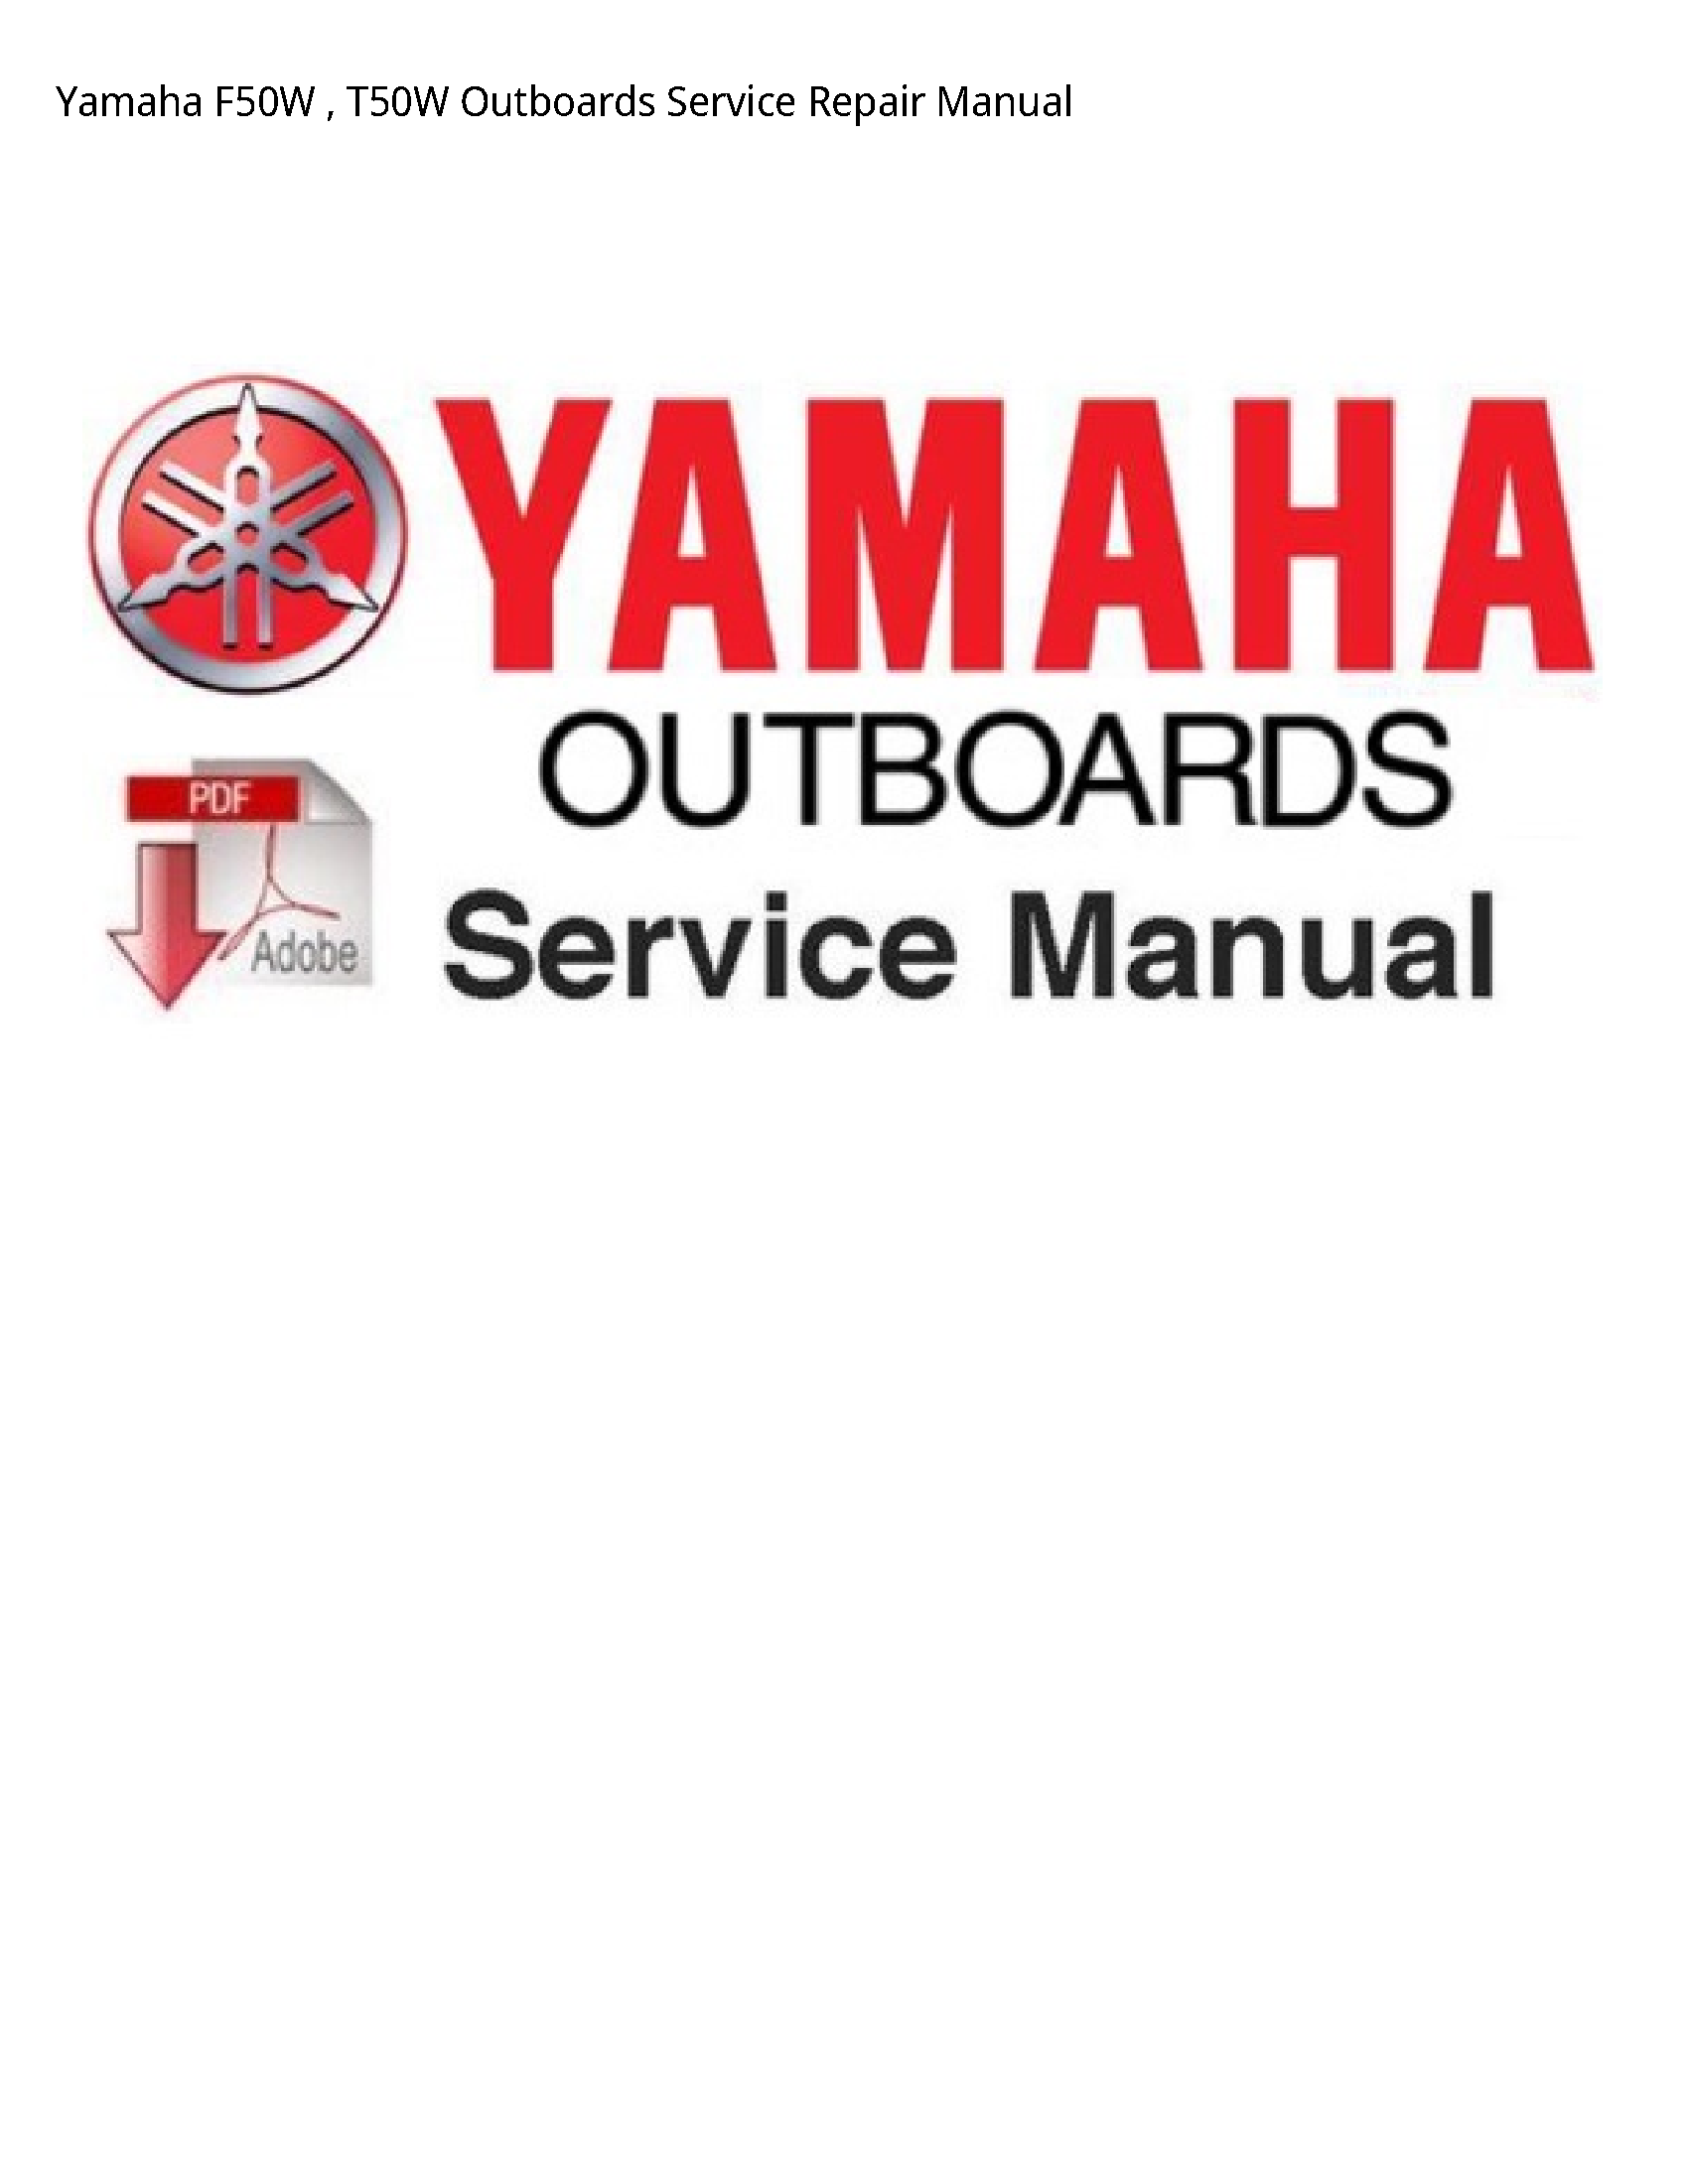 Yamaha F50W Outboards manual